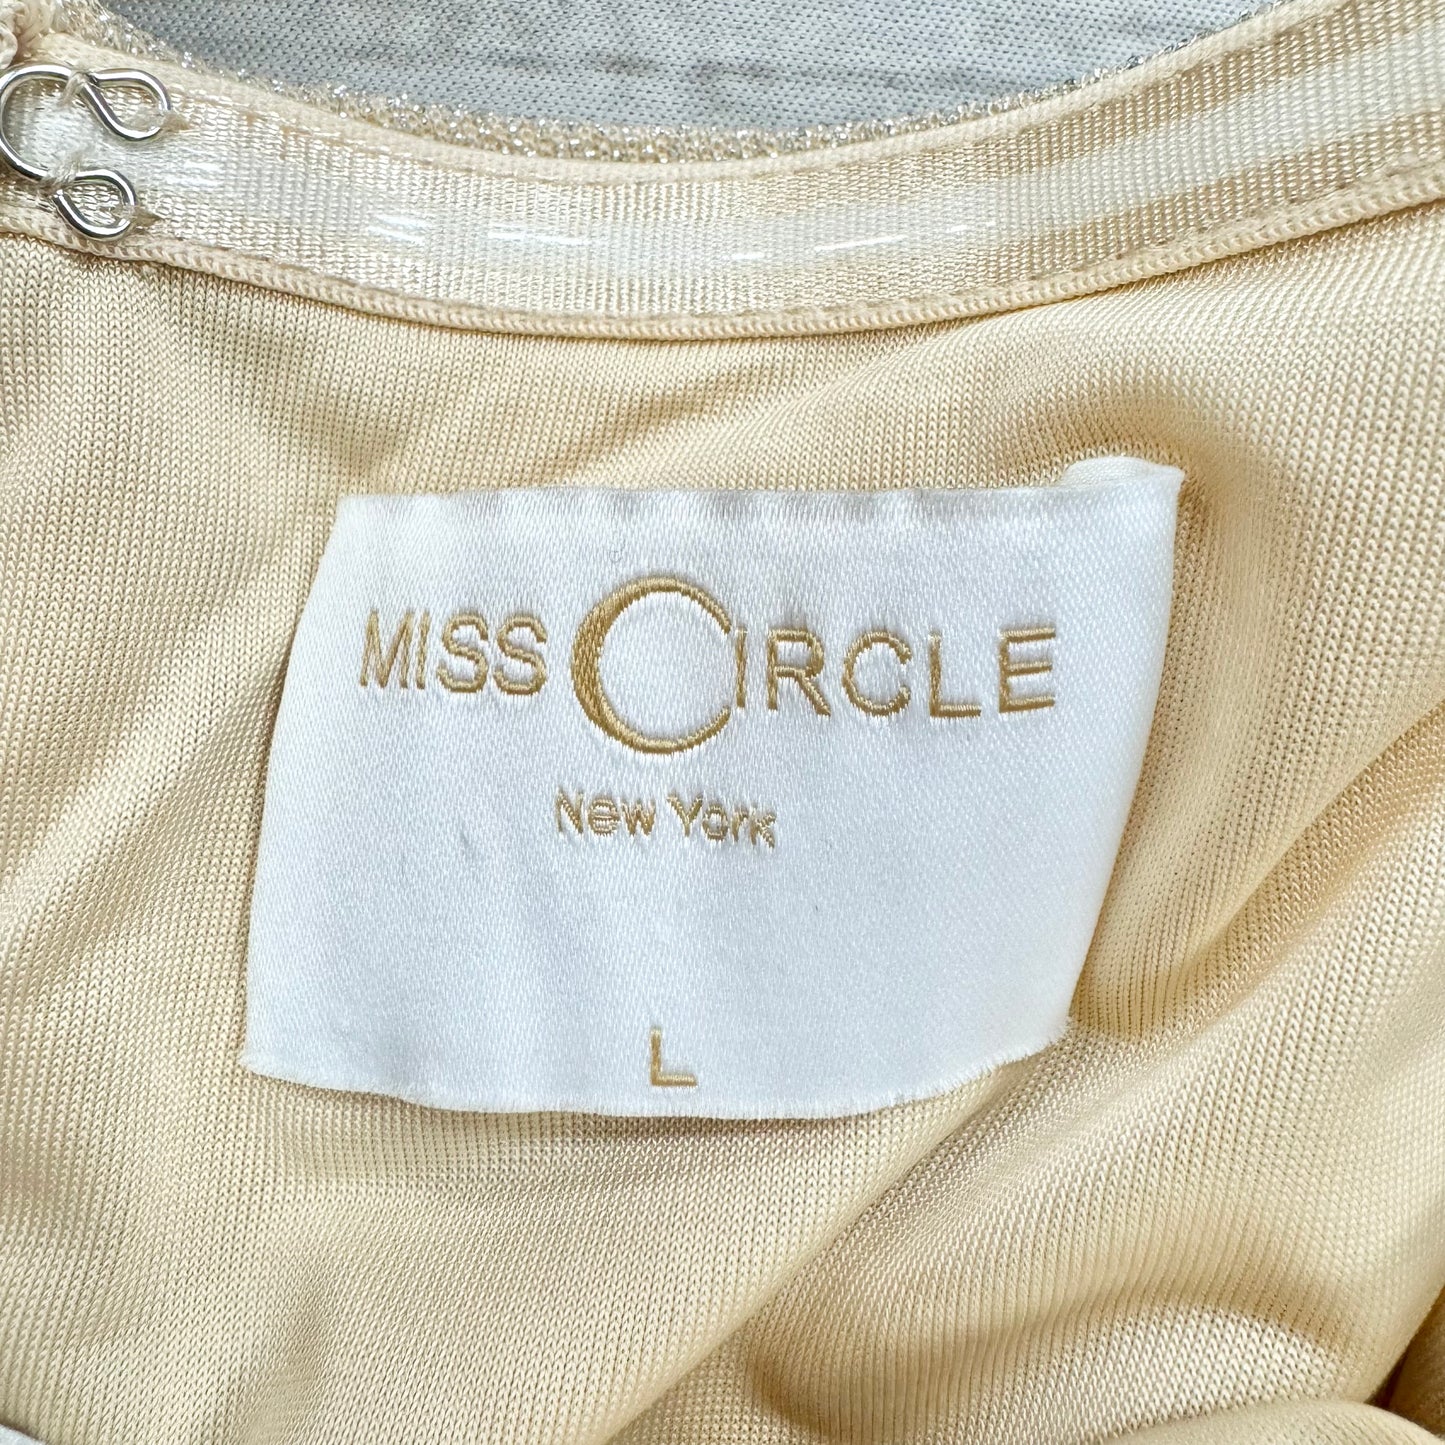 Dress Party Midi By Miss Circle  Size: L